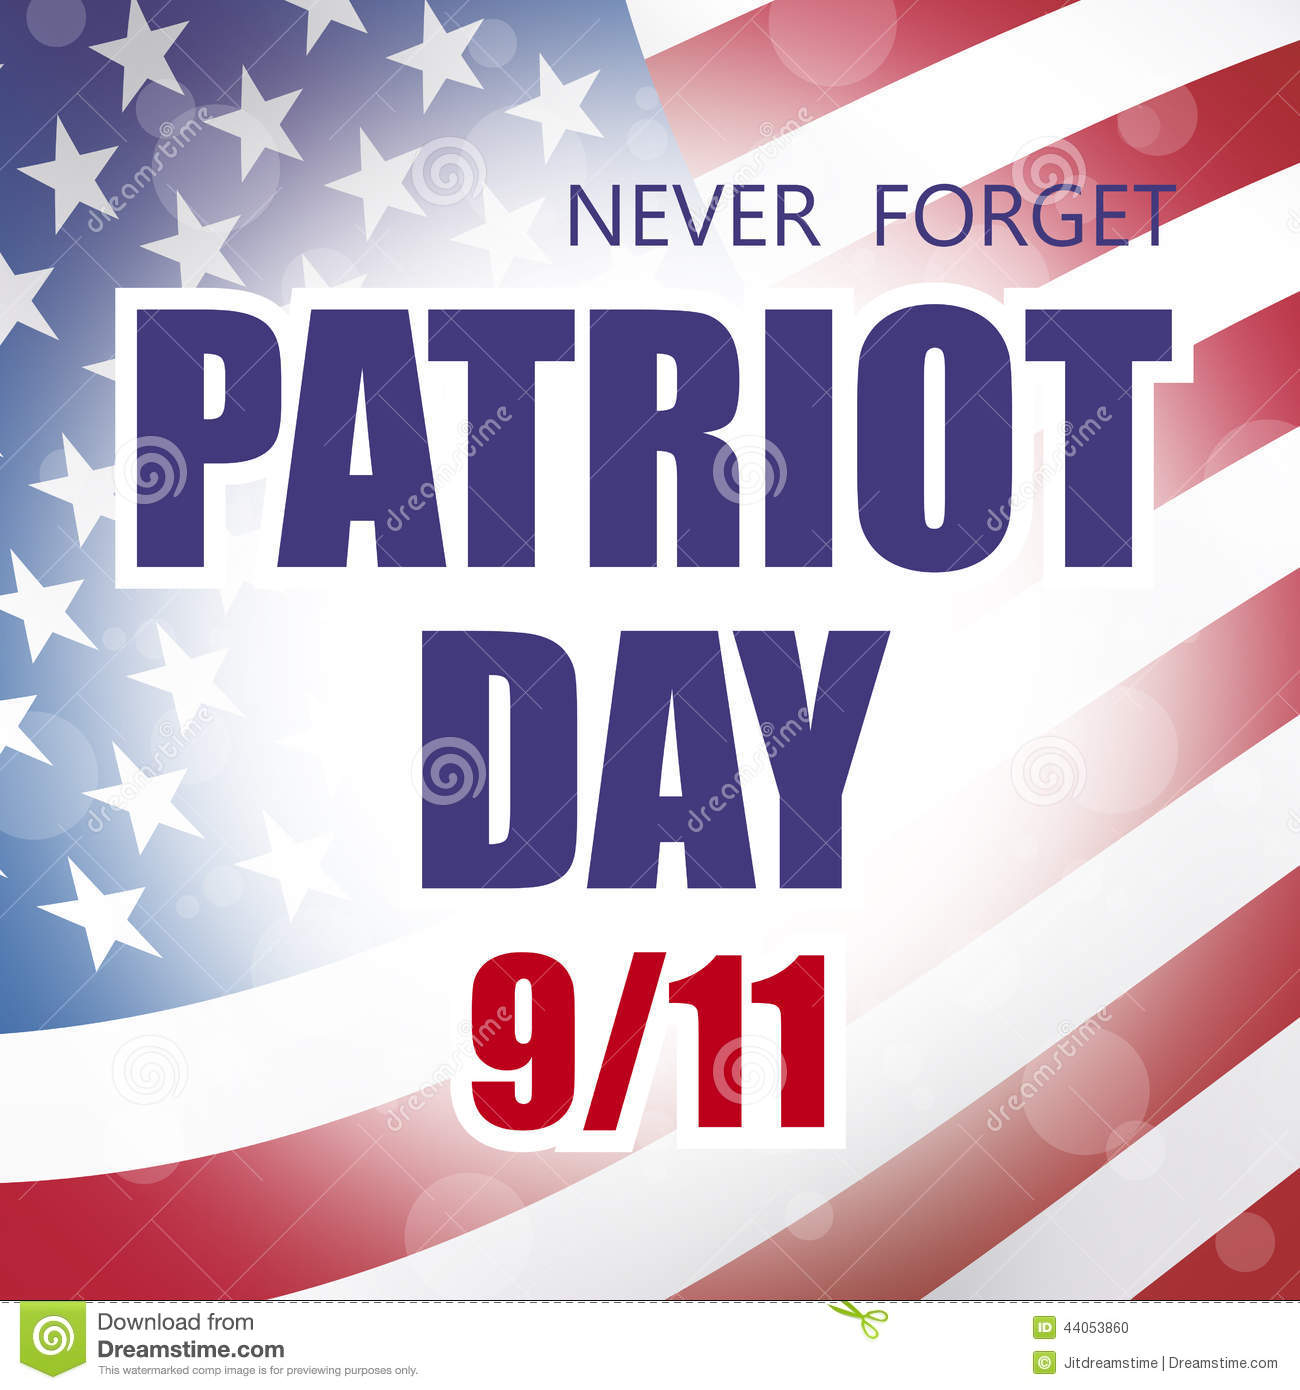 Patriot Day Clipart; Patriot 